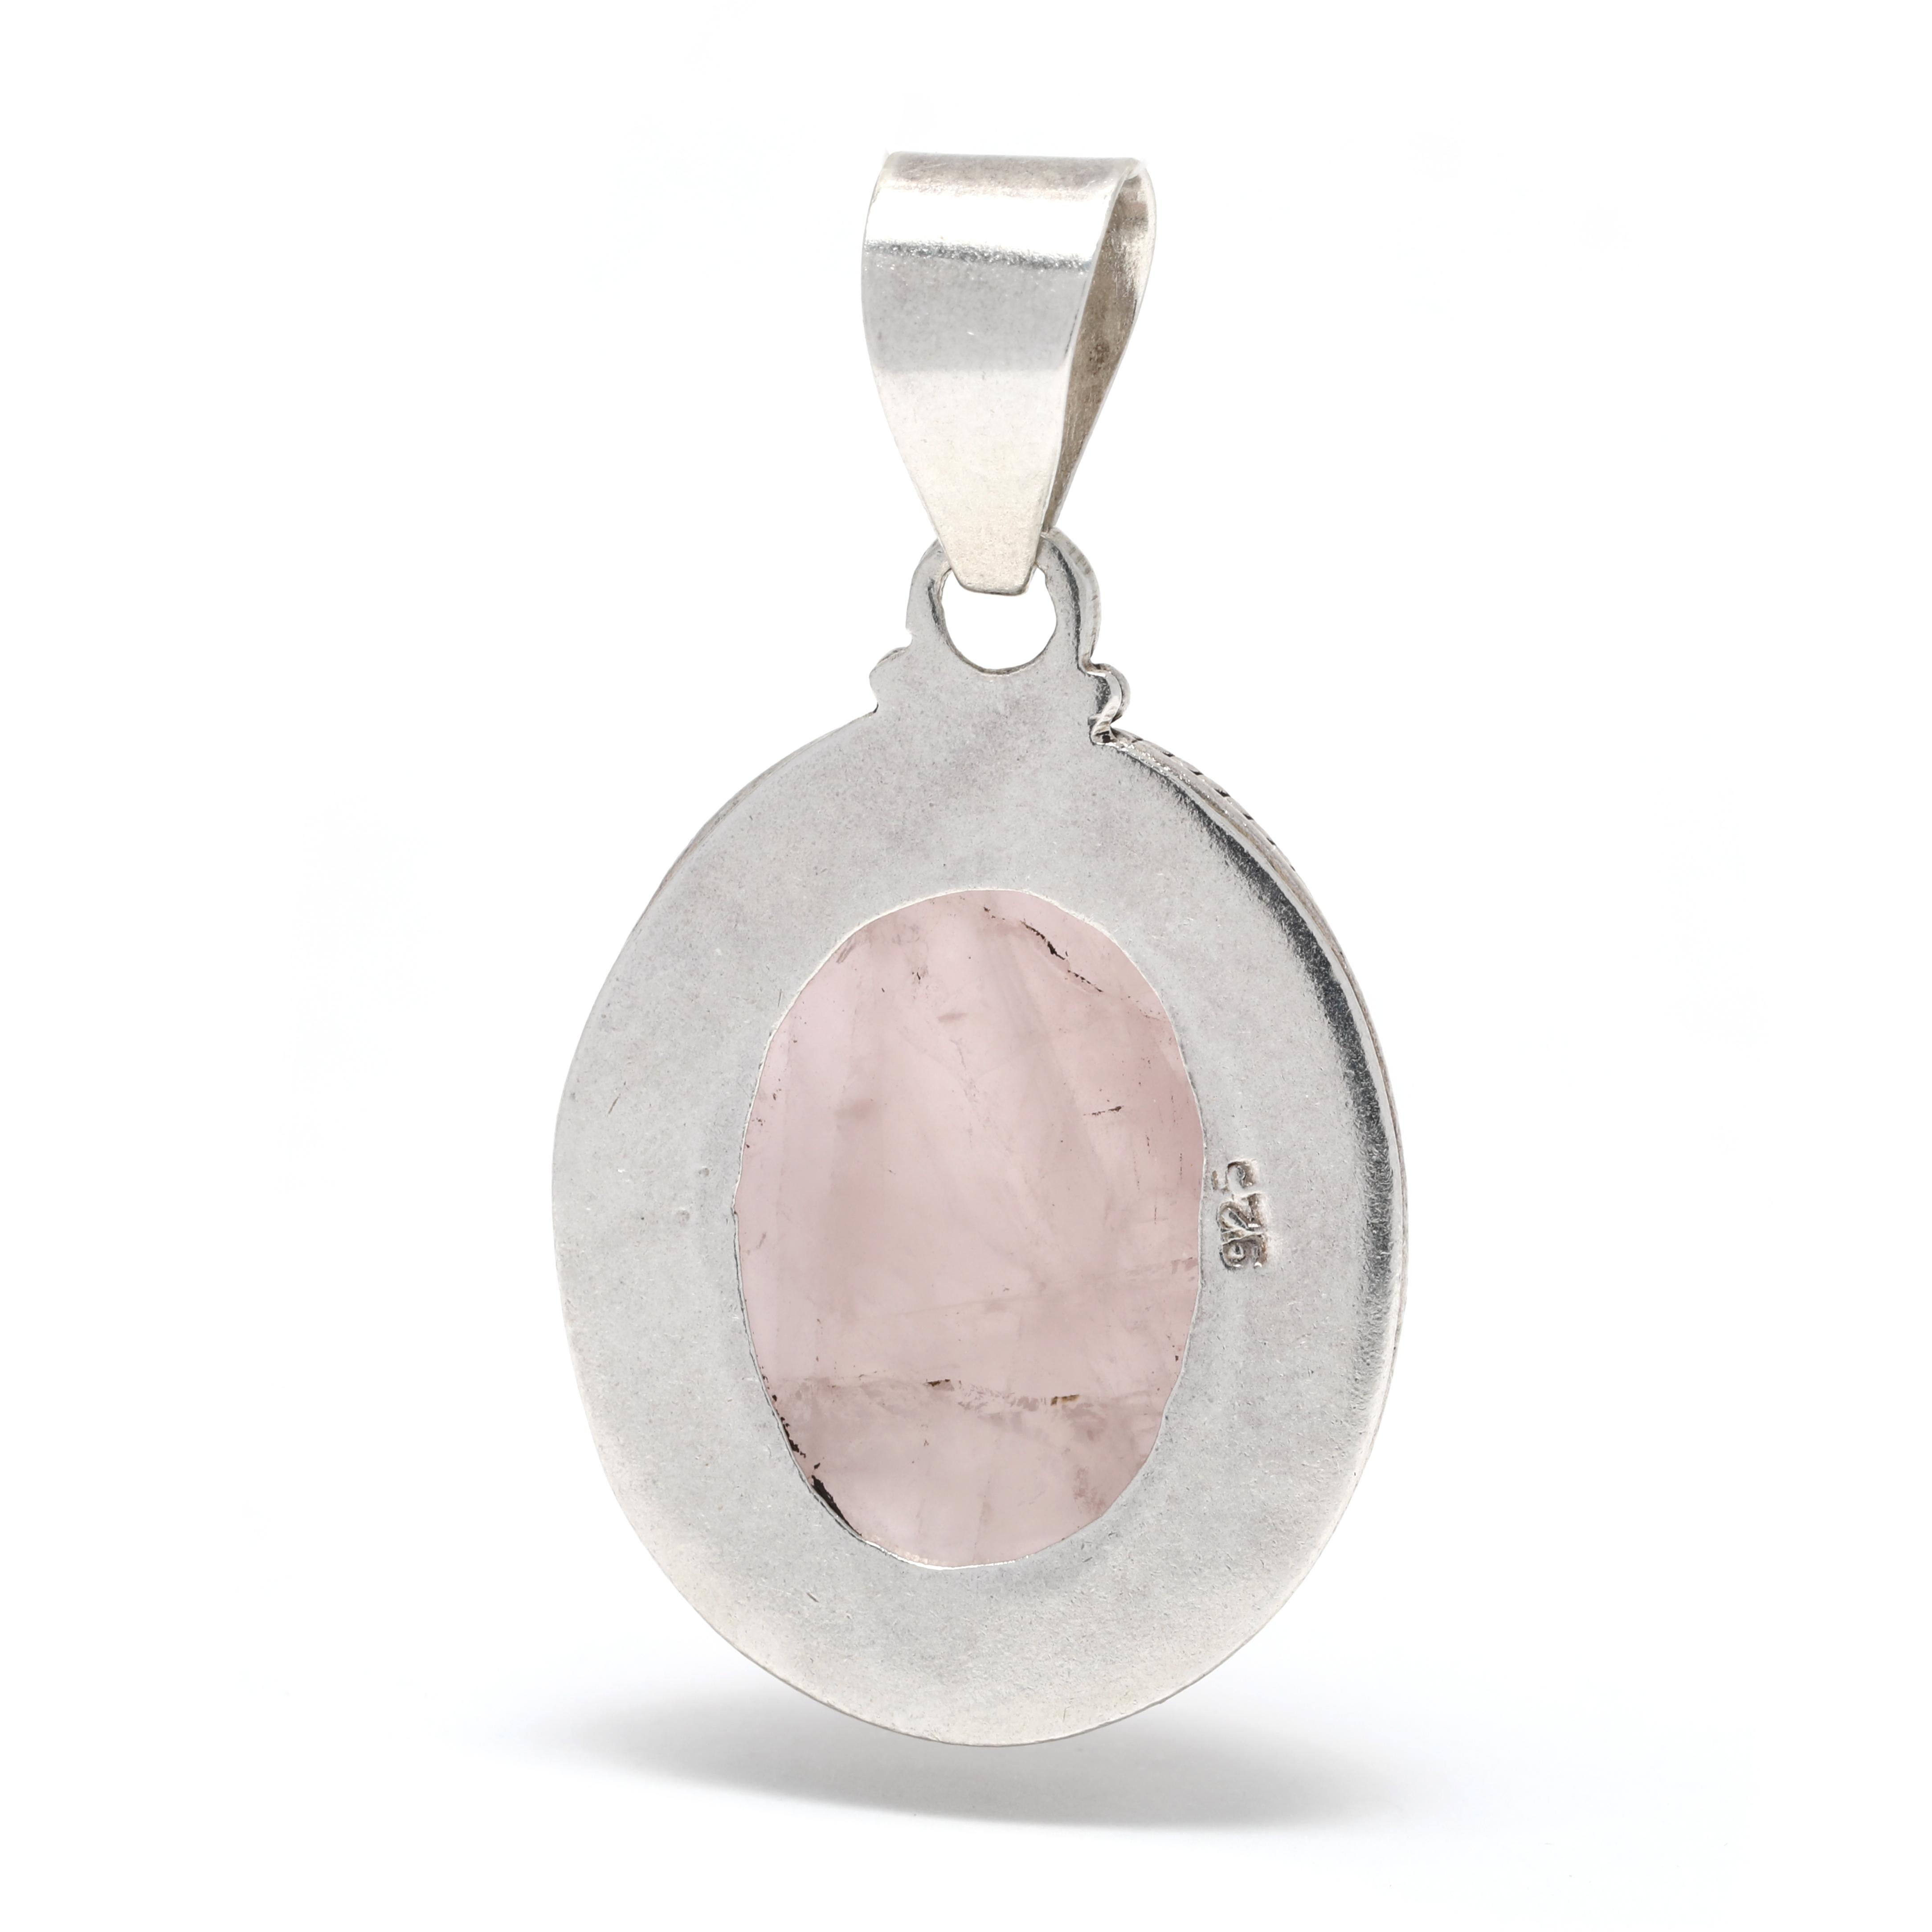 Oval Cut Vintage Large 35ct Rose Quartz Pendant, Sterling Silver, Length 1 3/4 Inch, Pink For Sale